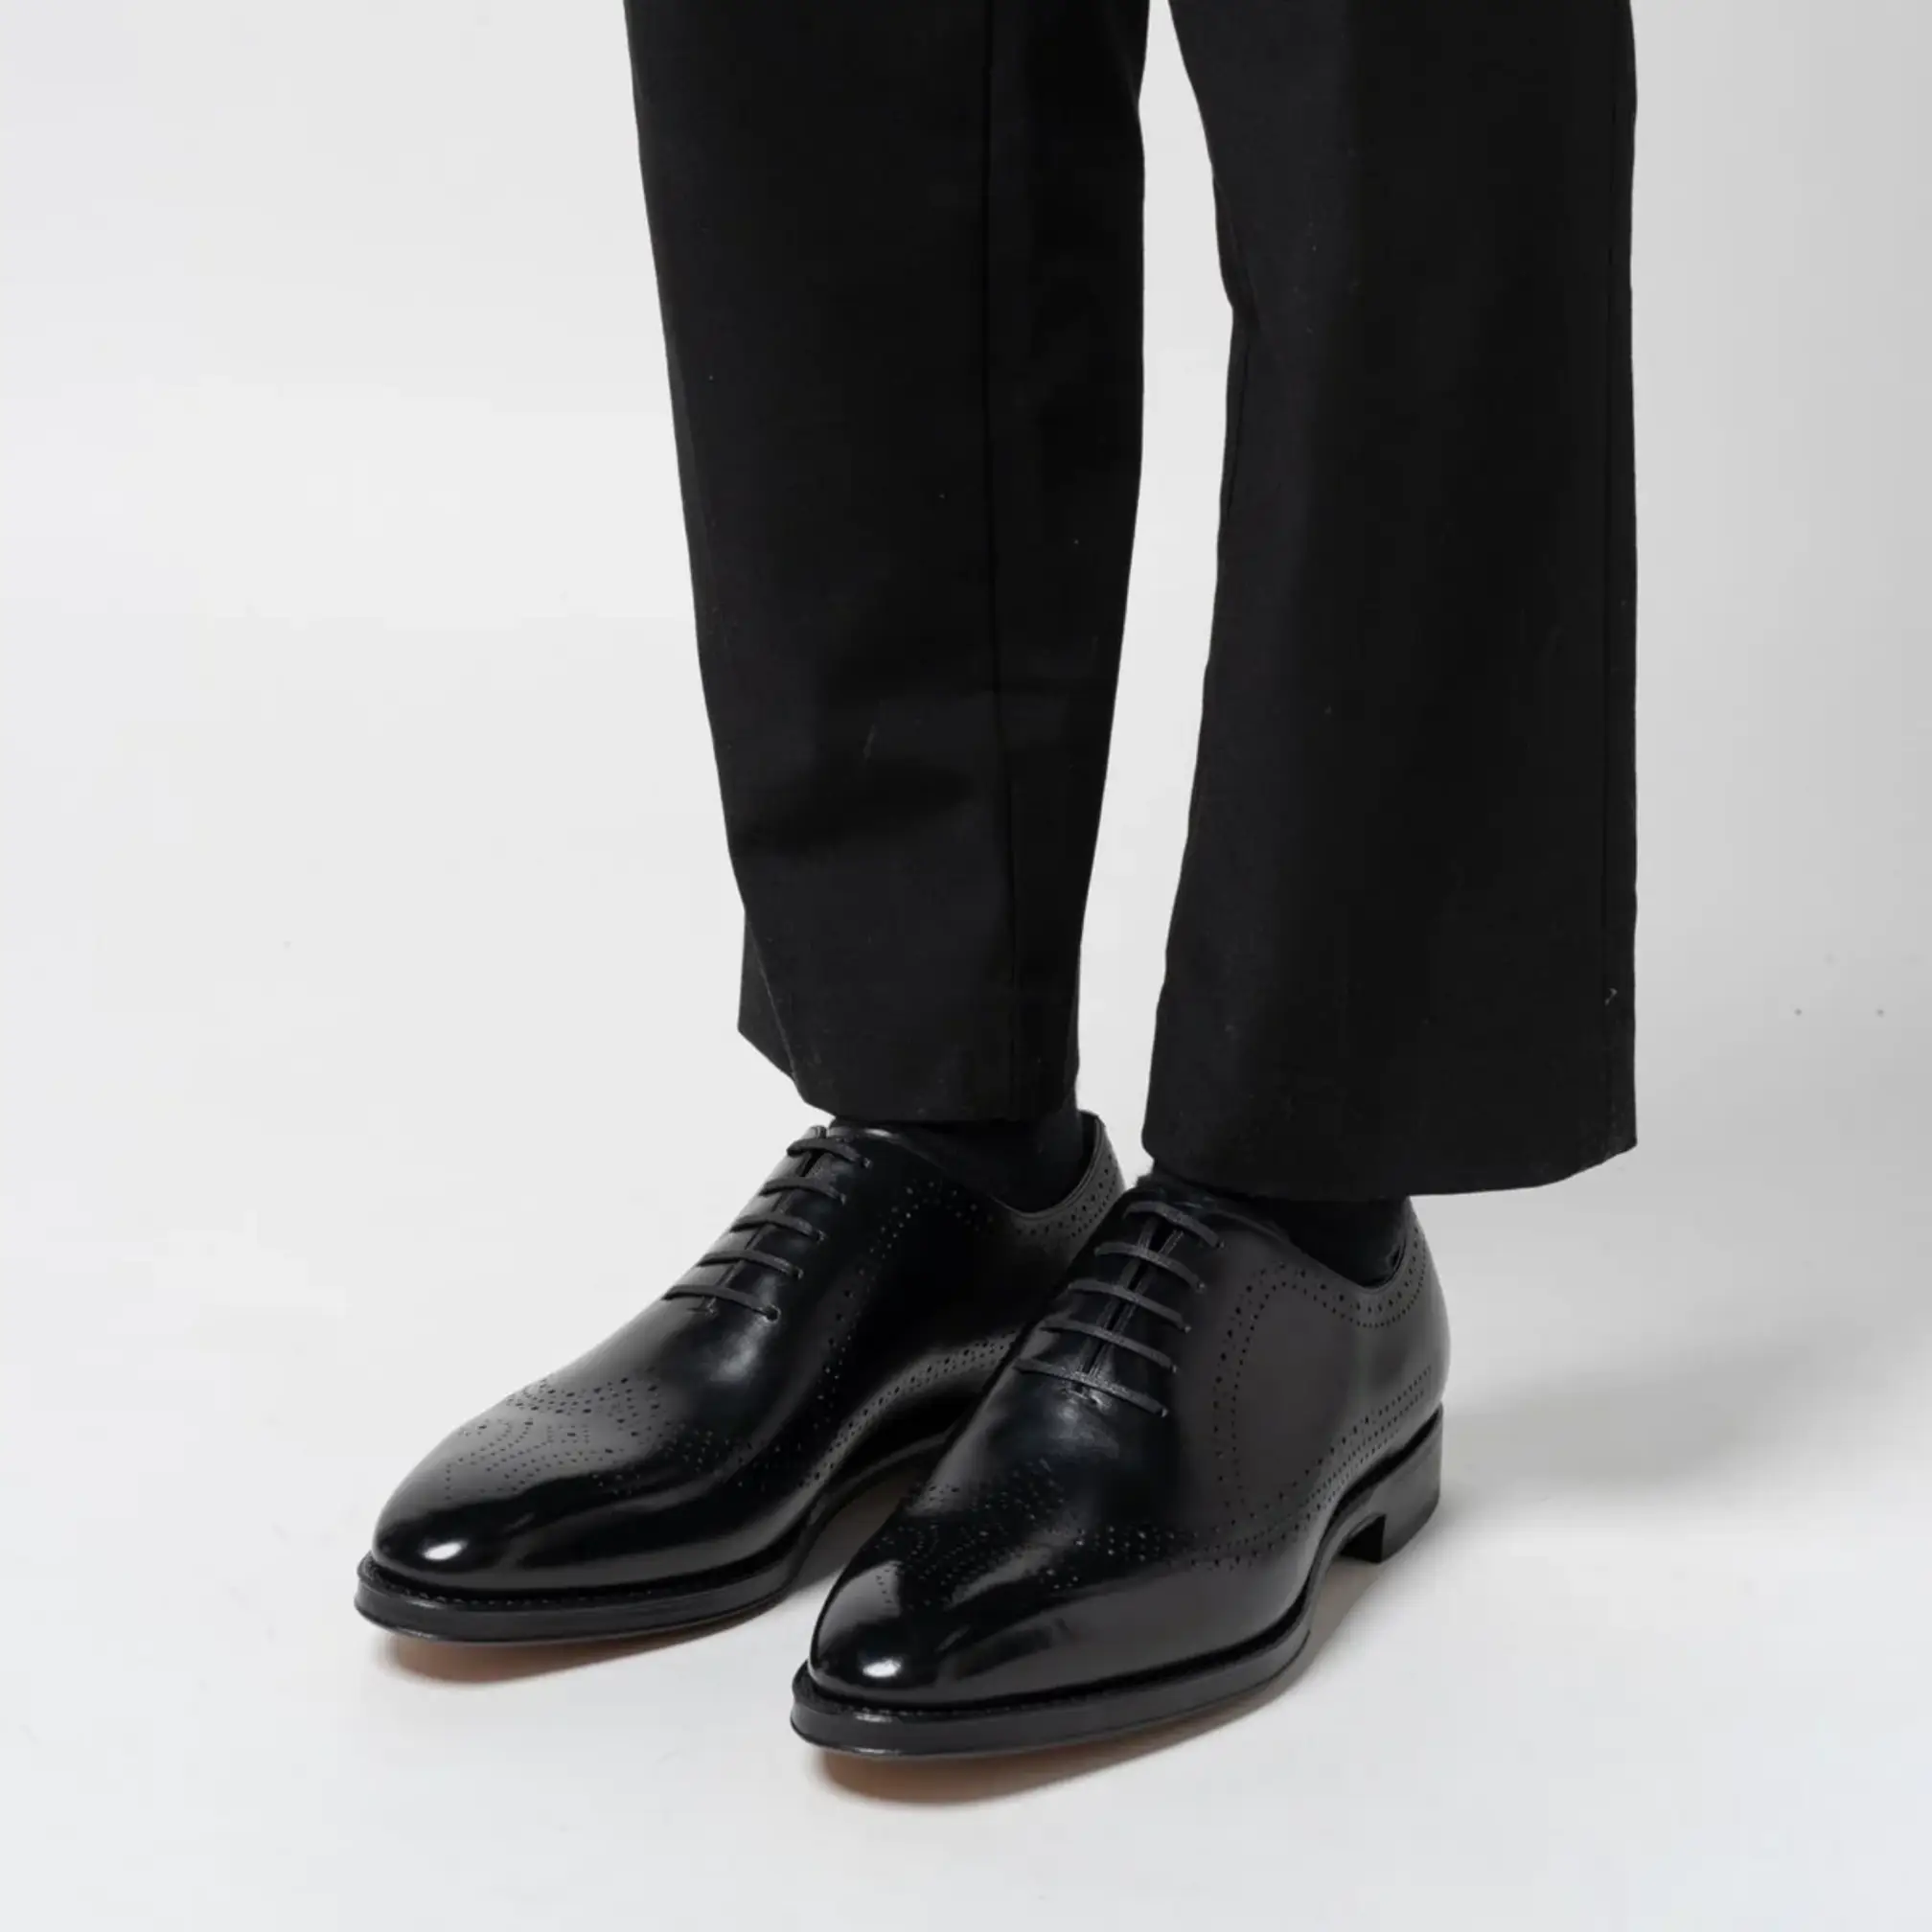 Bally Scandor Calfskin Leather Oxford Shoes Black